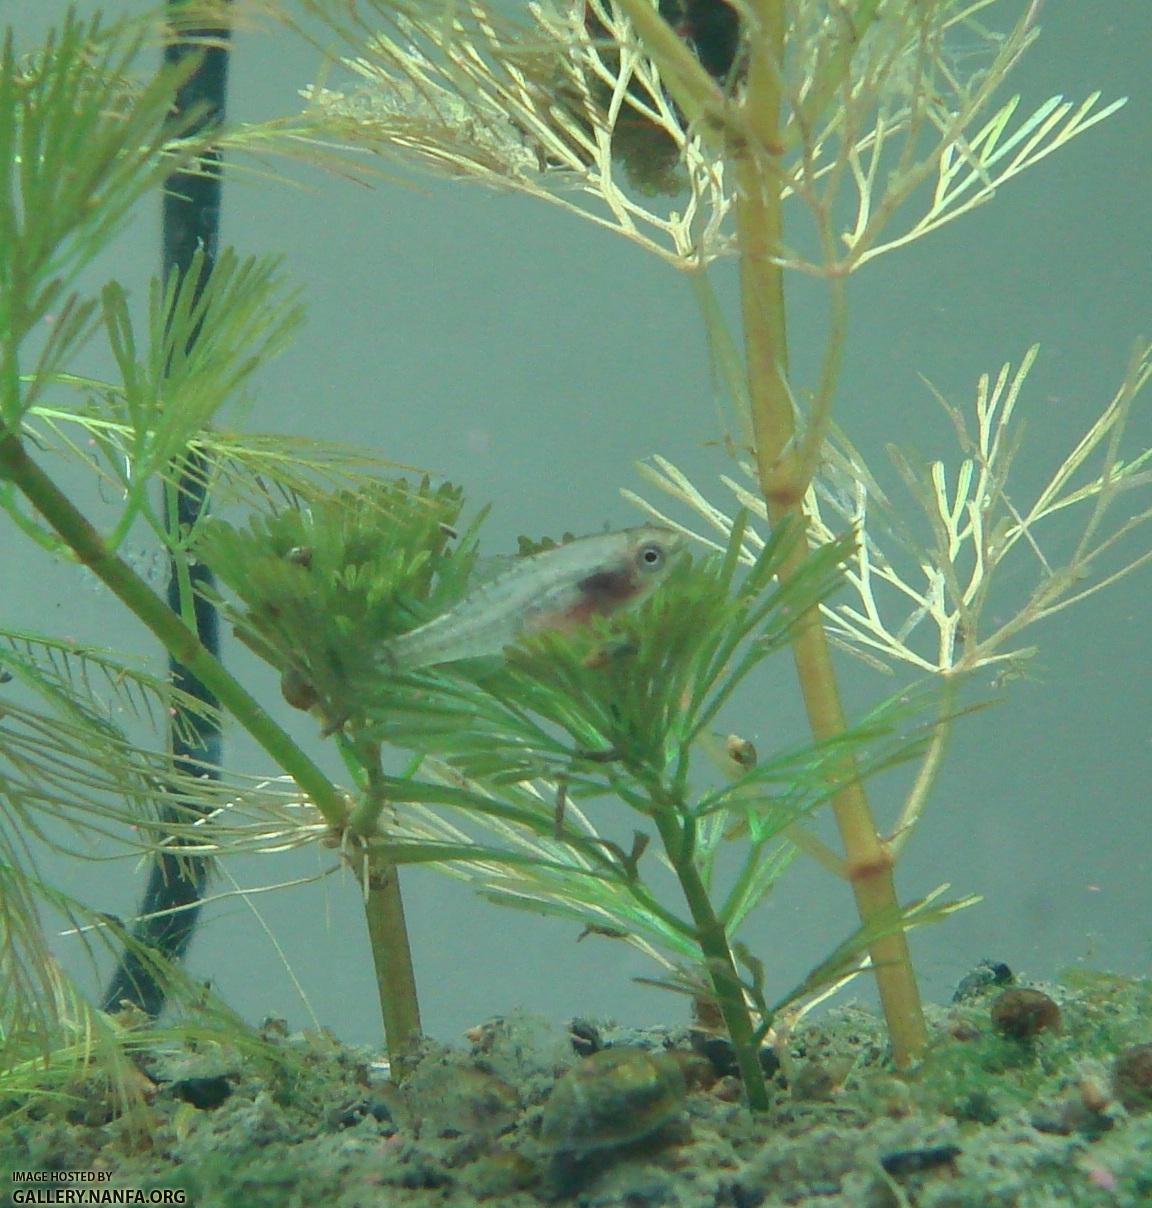 Elassoma gilberti sits on Cabomba caroliniana stem